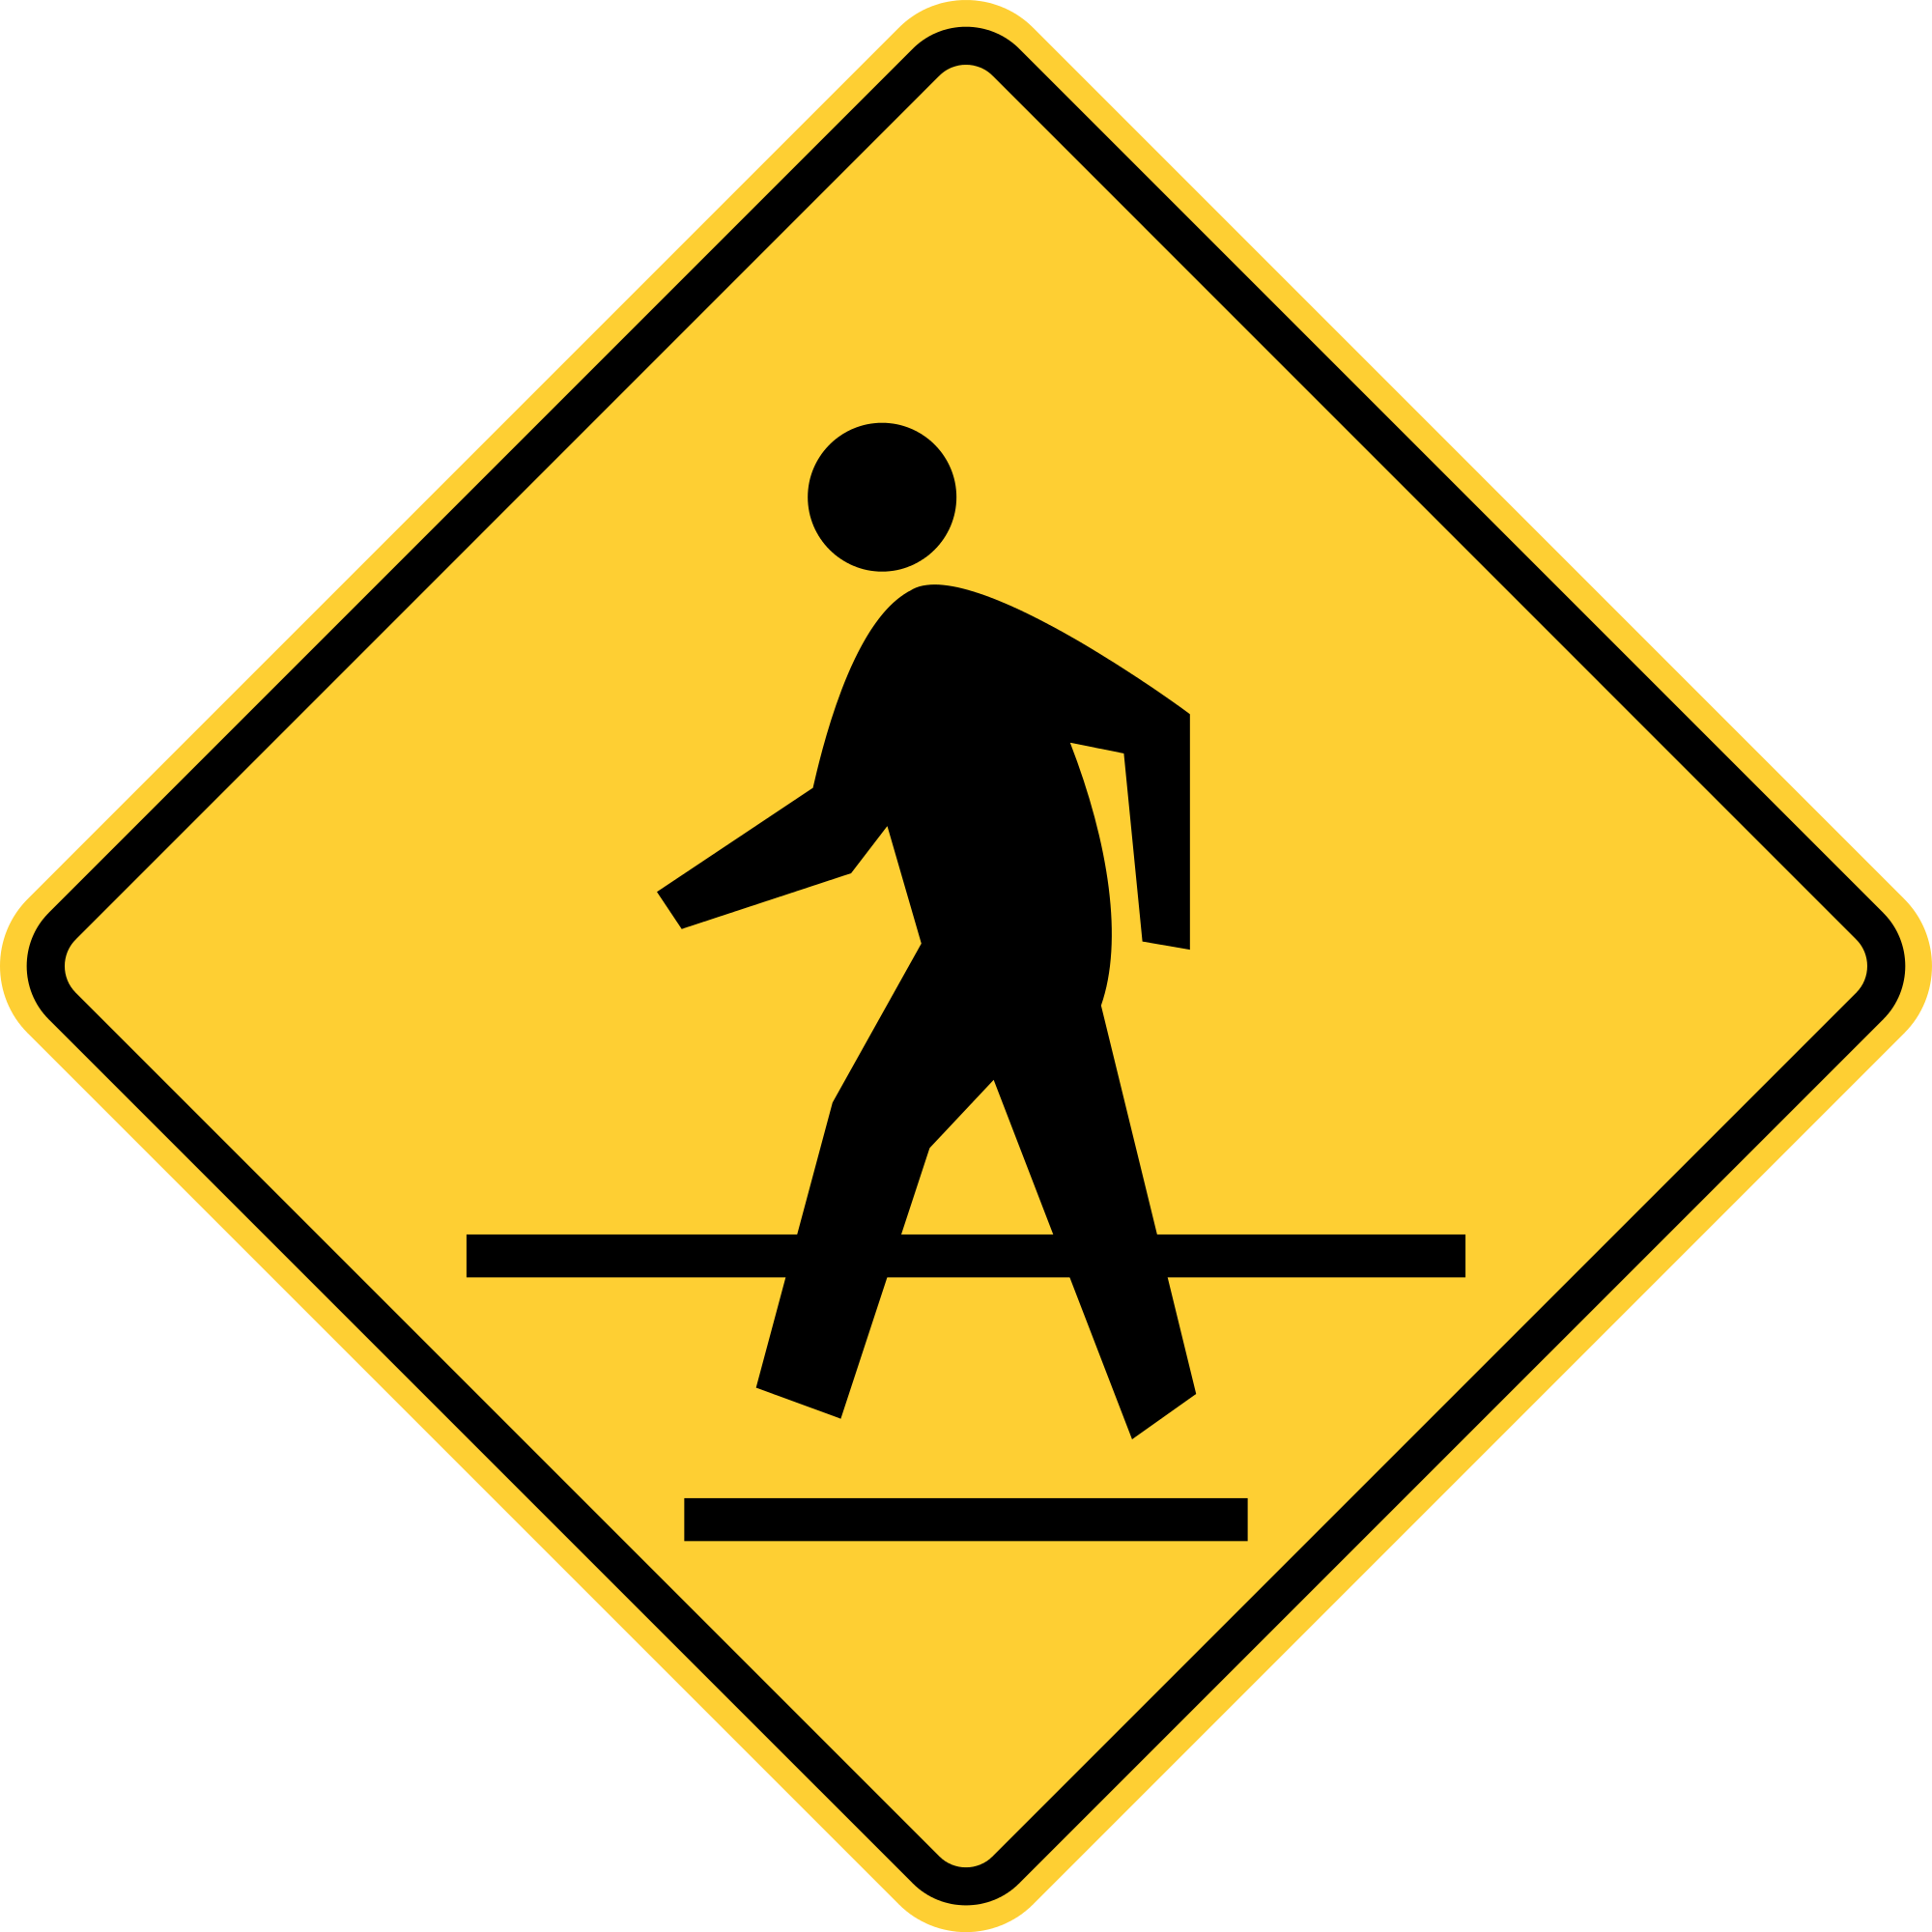 File:US crosswalk sign.svg - Wikimedia Commons